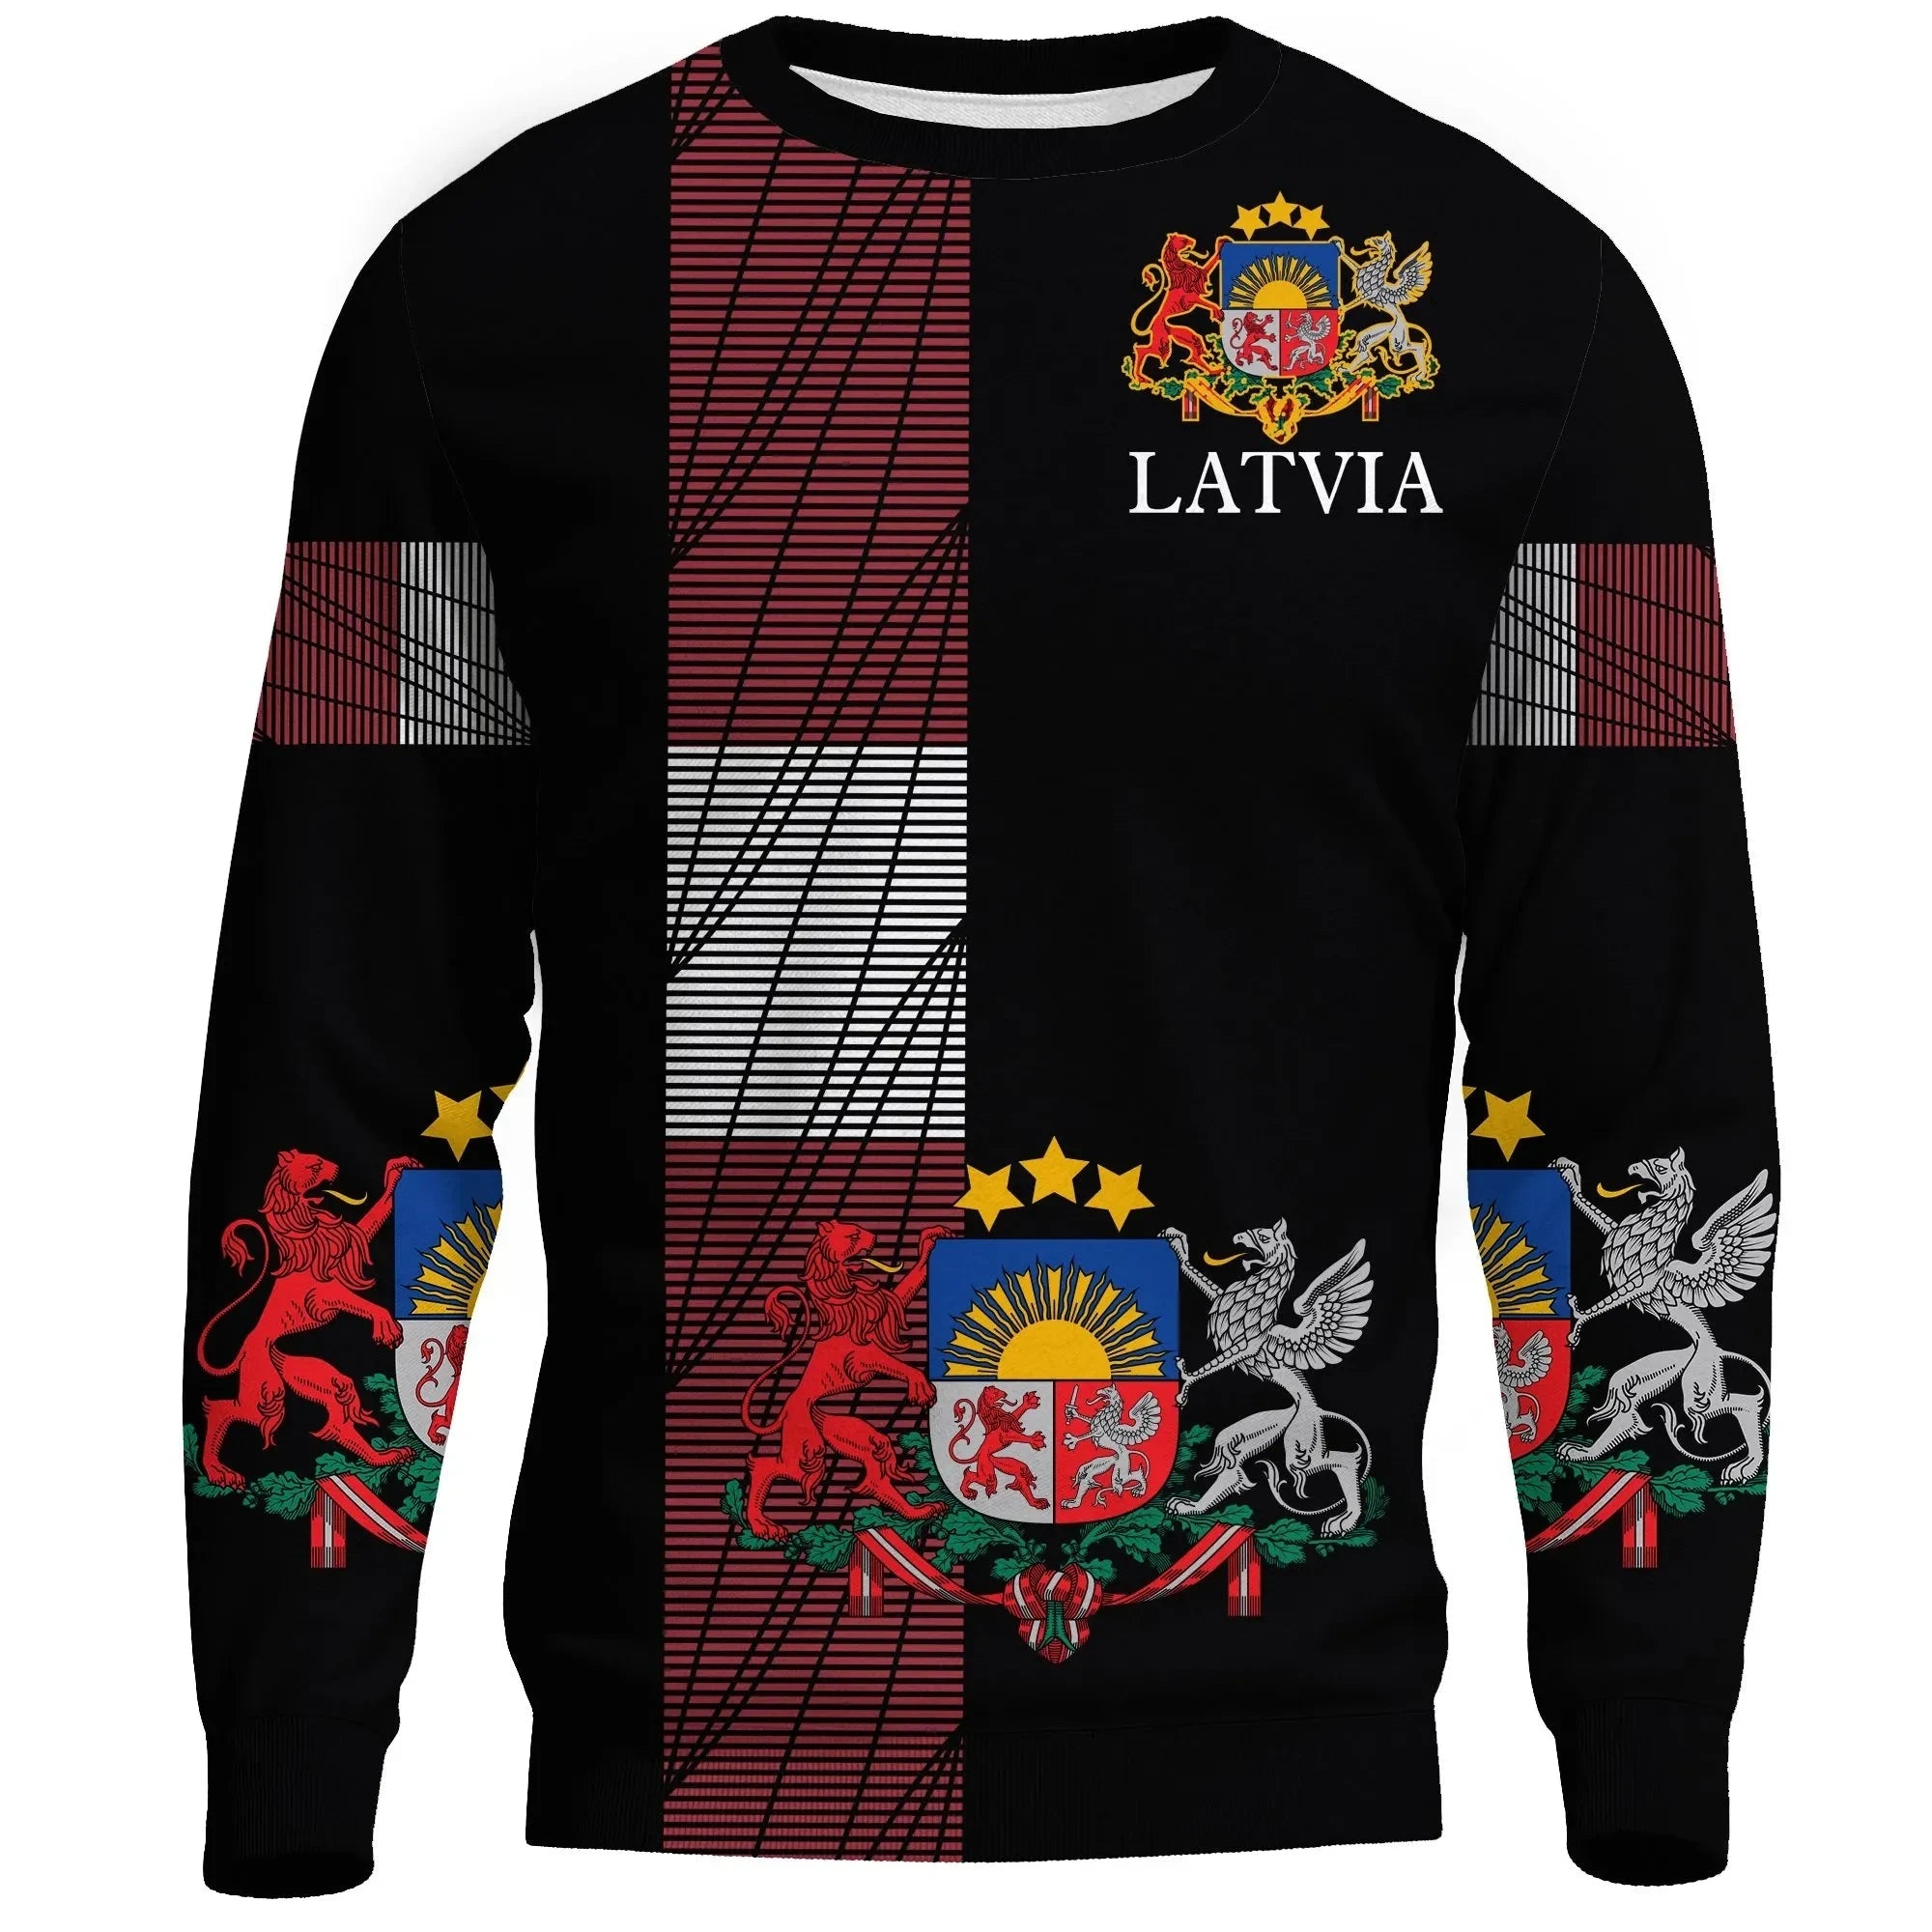 latvia-united-sweatshirt-knitted-long-sleeved-sweater